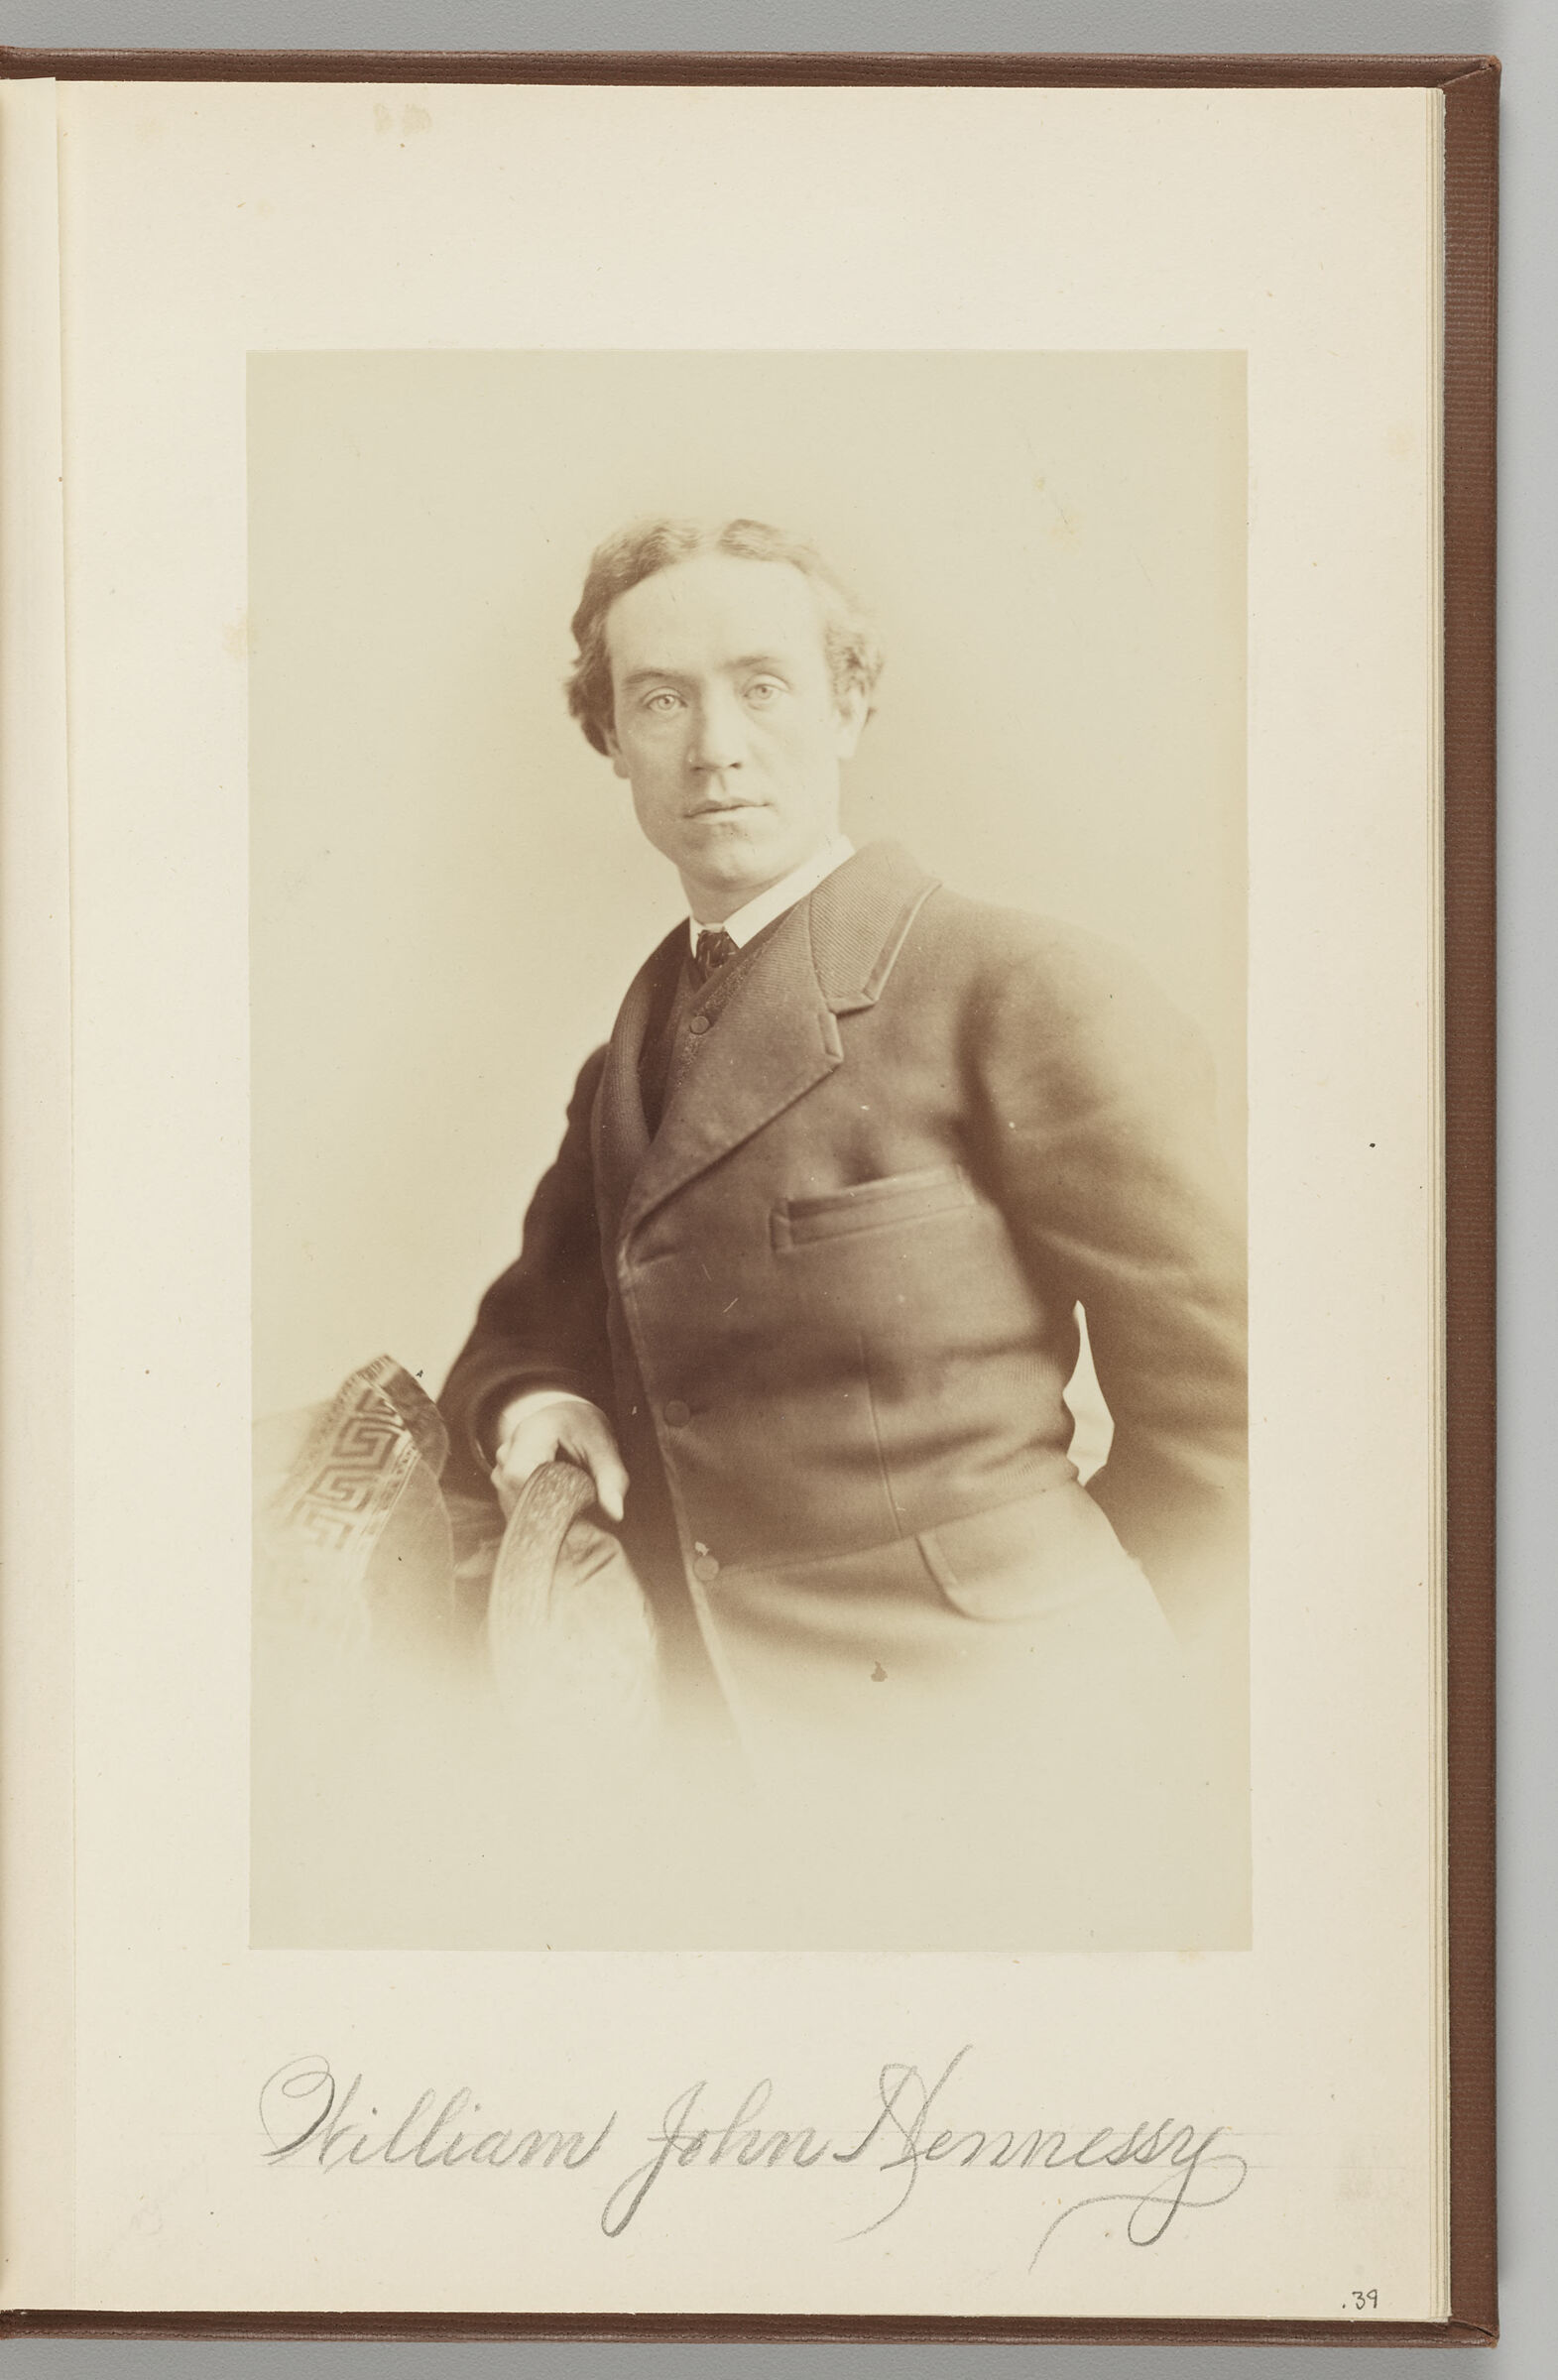 William John Hennessy (1839-1917)